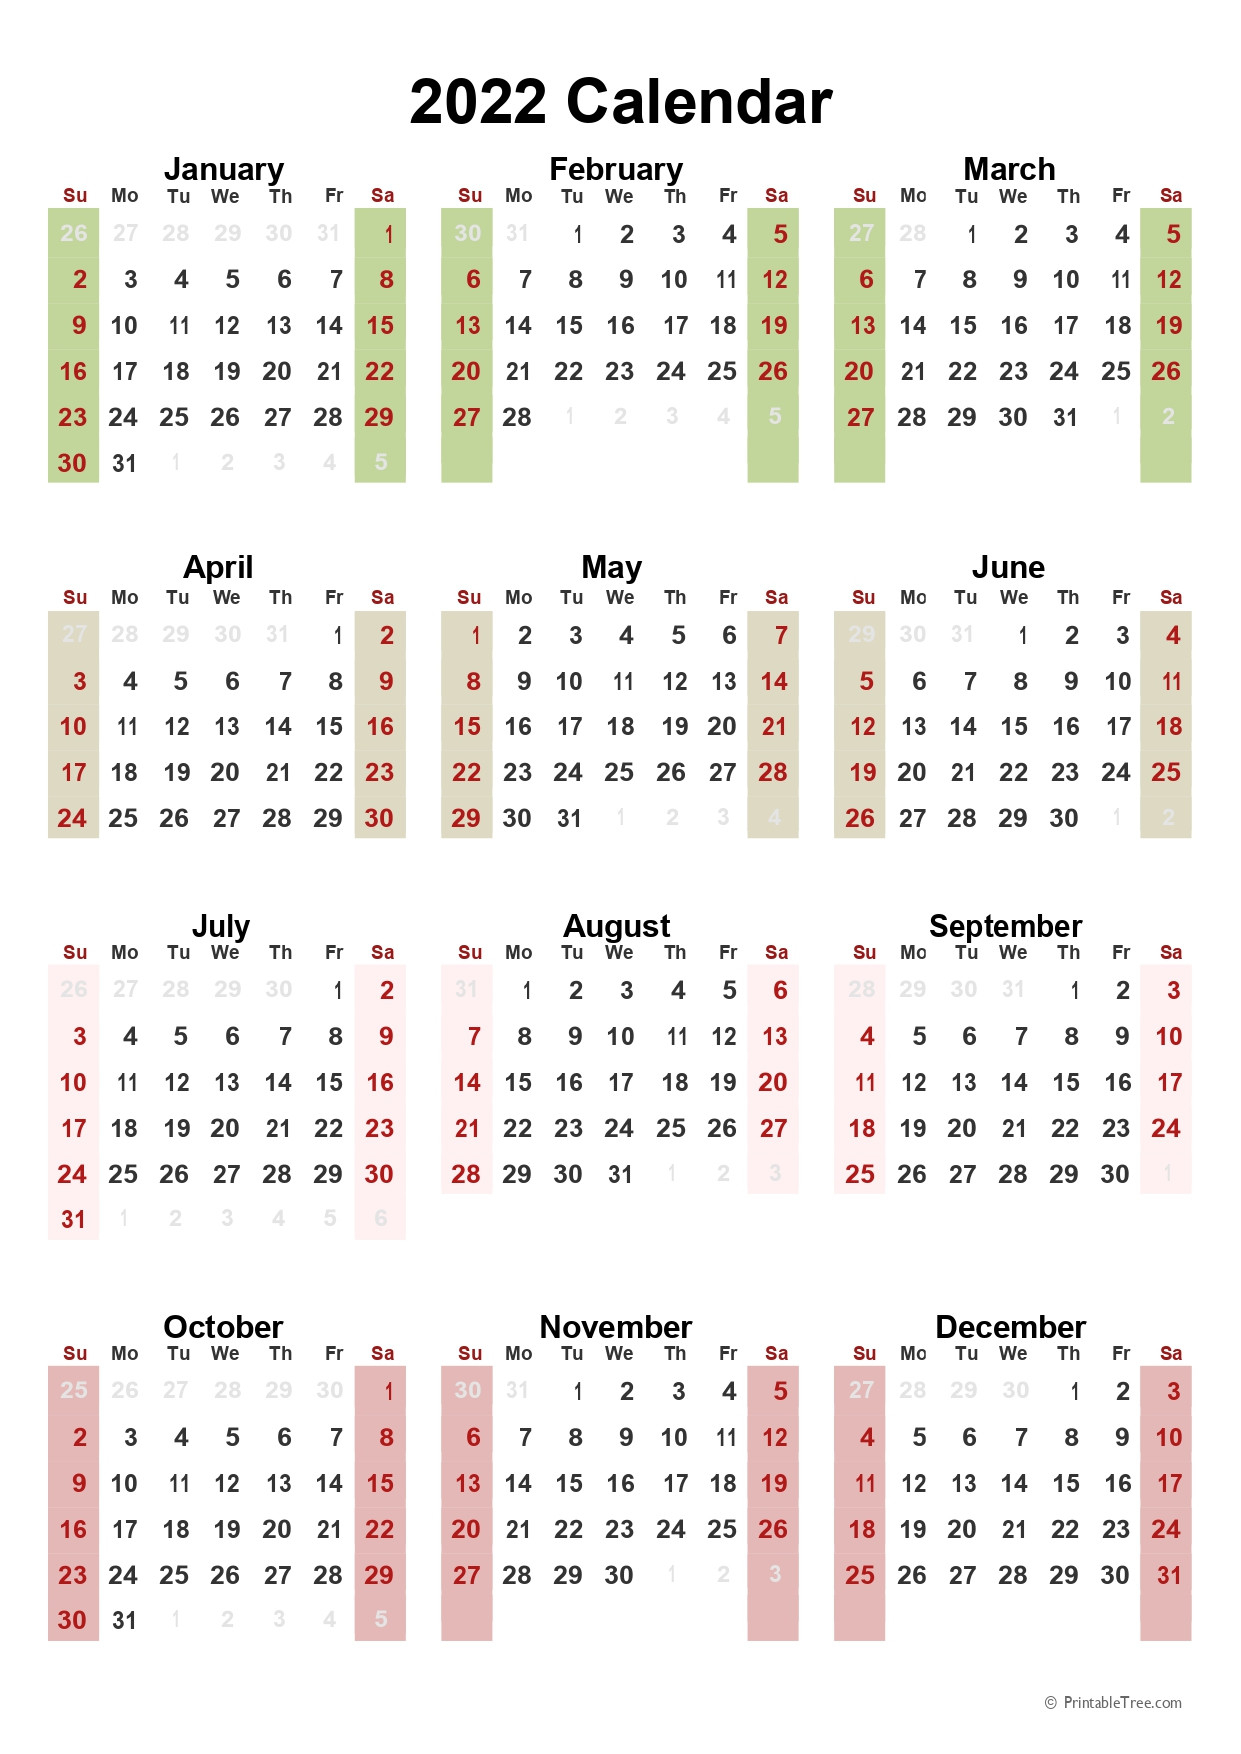 2022 Calendar Printable One Page - Printable 2022 Calendar  Free Printable Calendar Sheets 2022